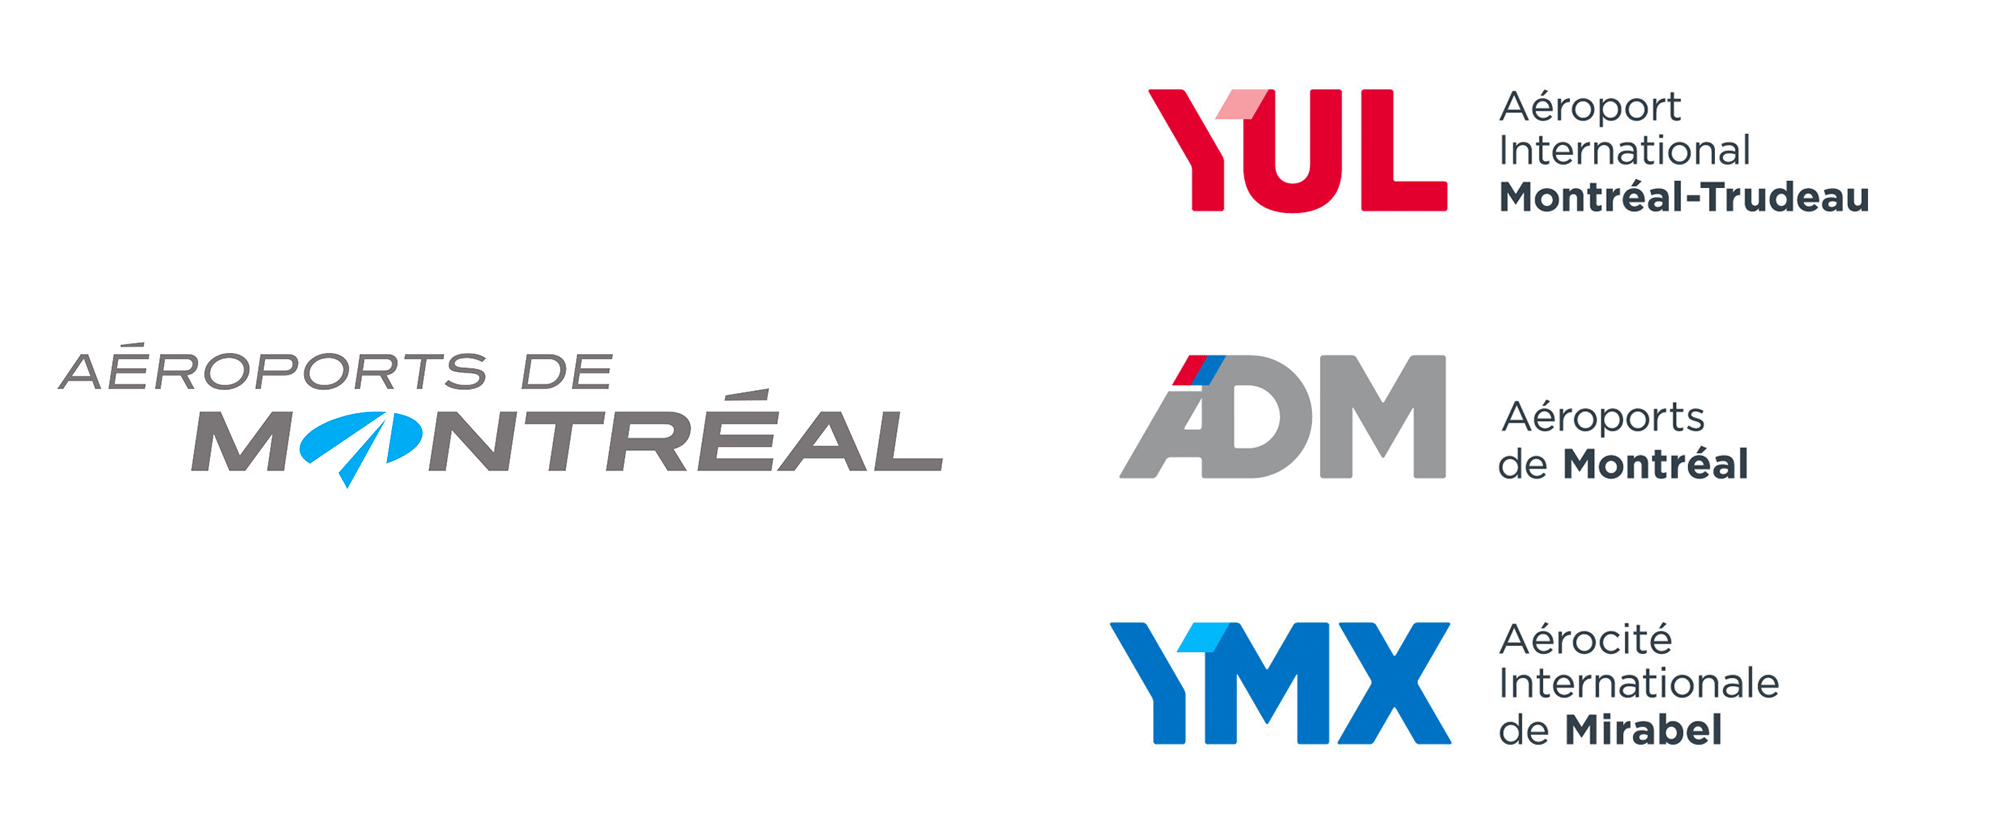 New Logos for Aéroports de Montréal